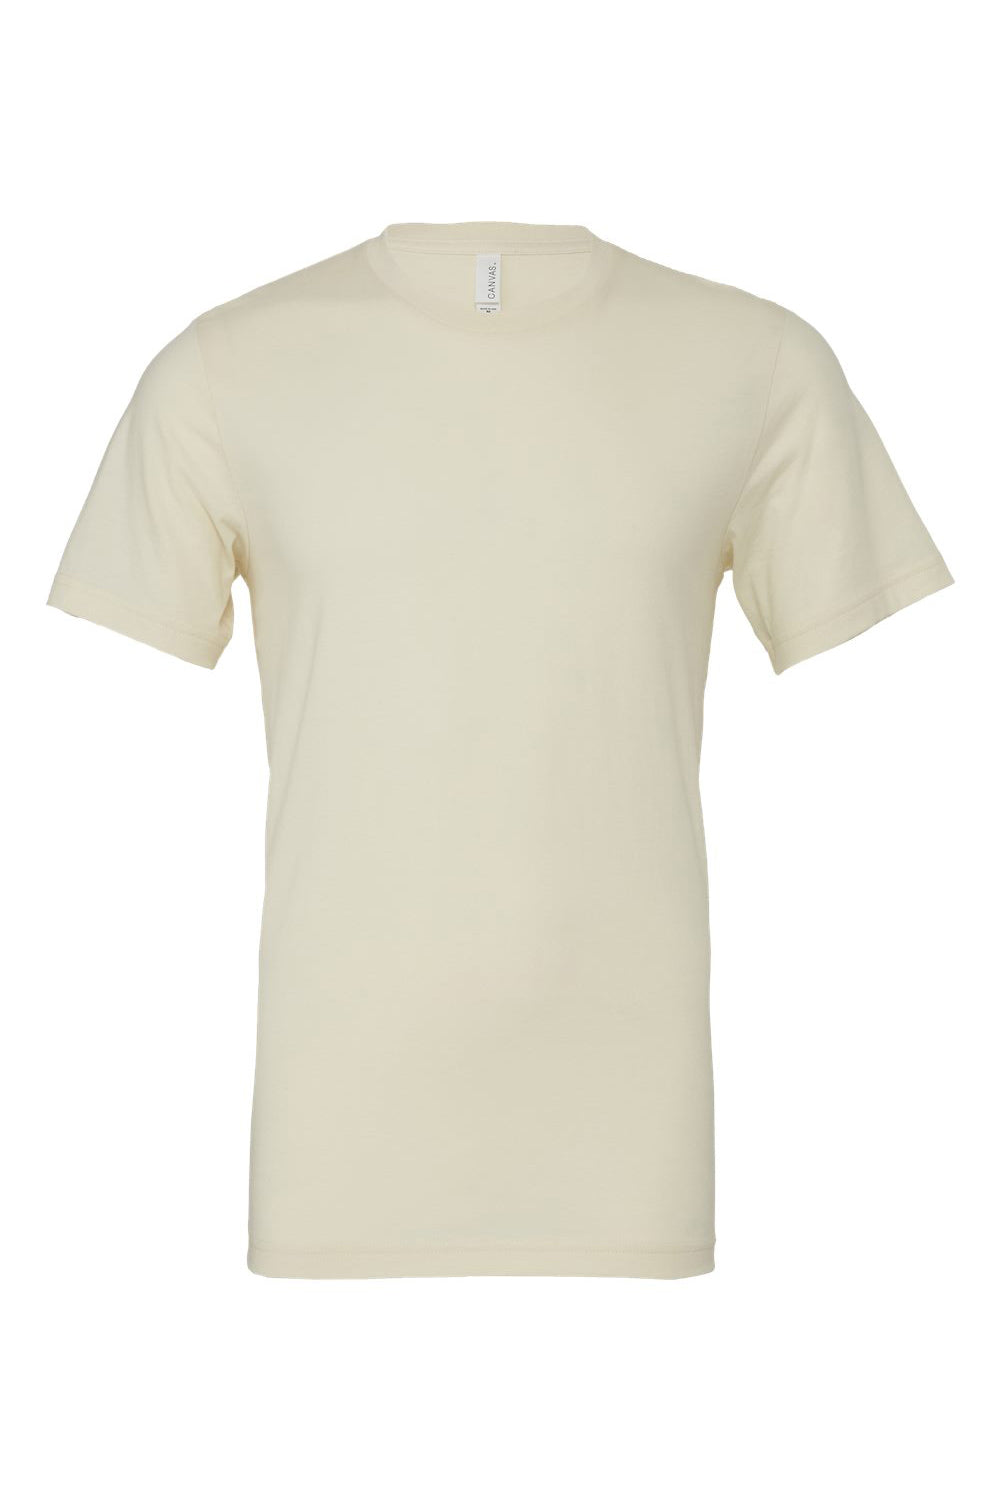 Bella + Canvas BC3001/3001C Mens Jersey Short Sleeve Crewneck T-Shirt Natural Flat Front